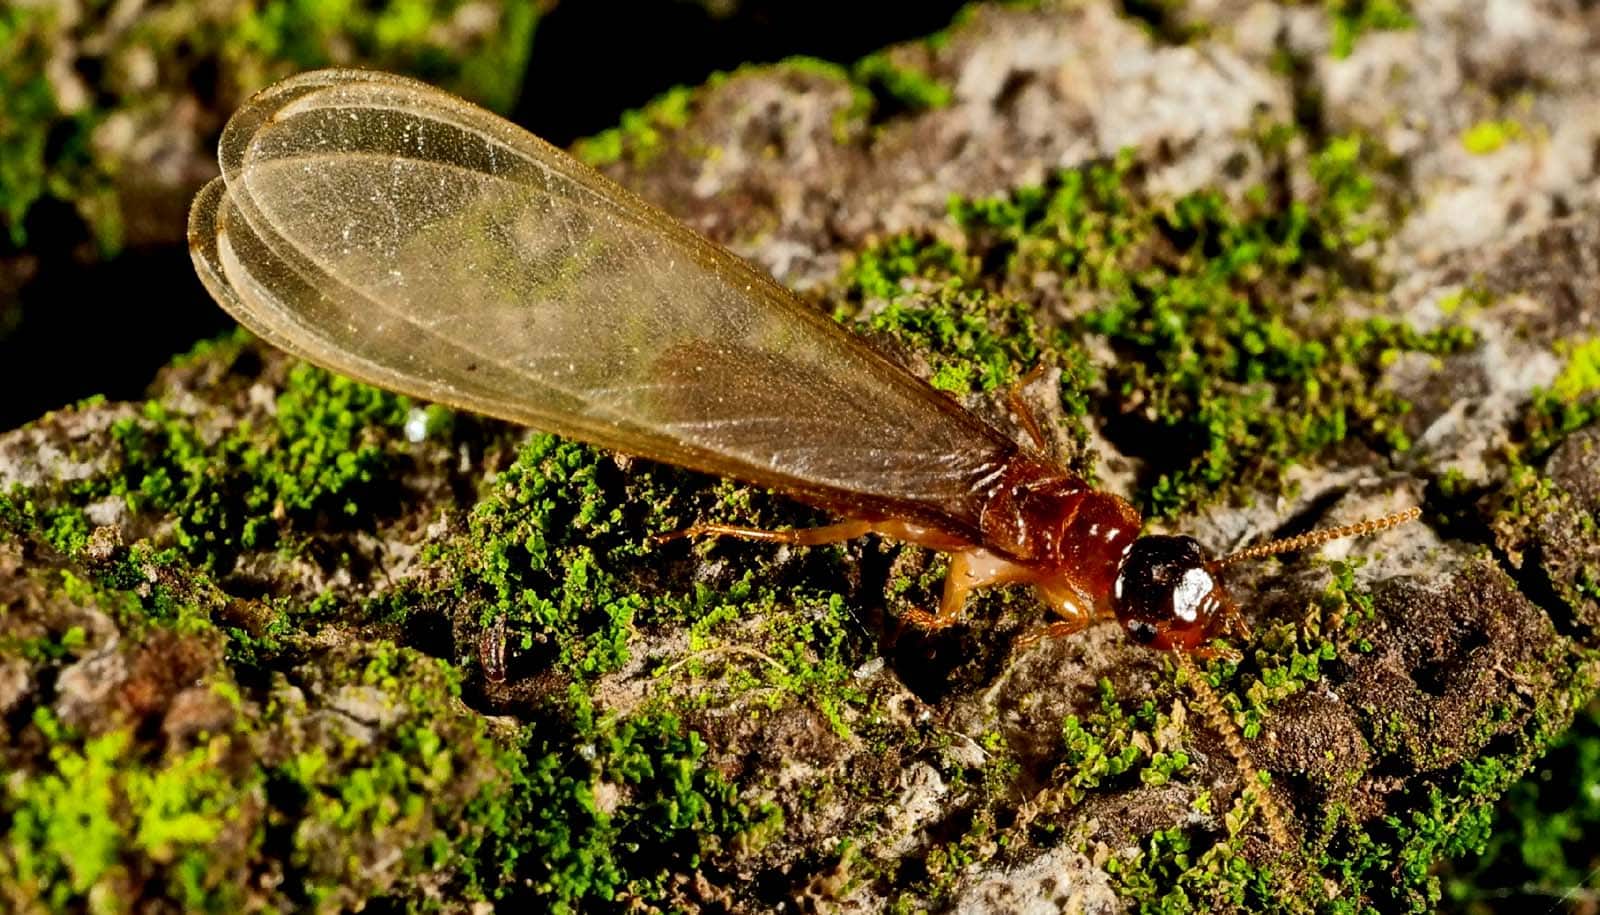 Termite colonies mature like human cities